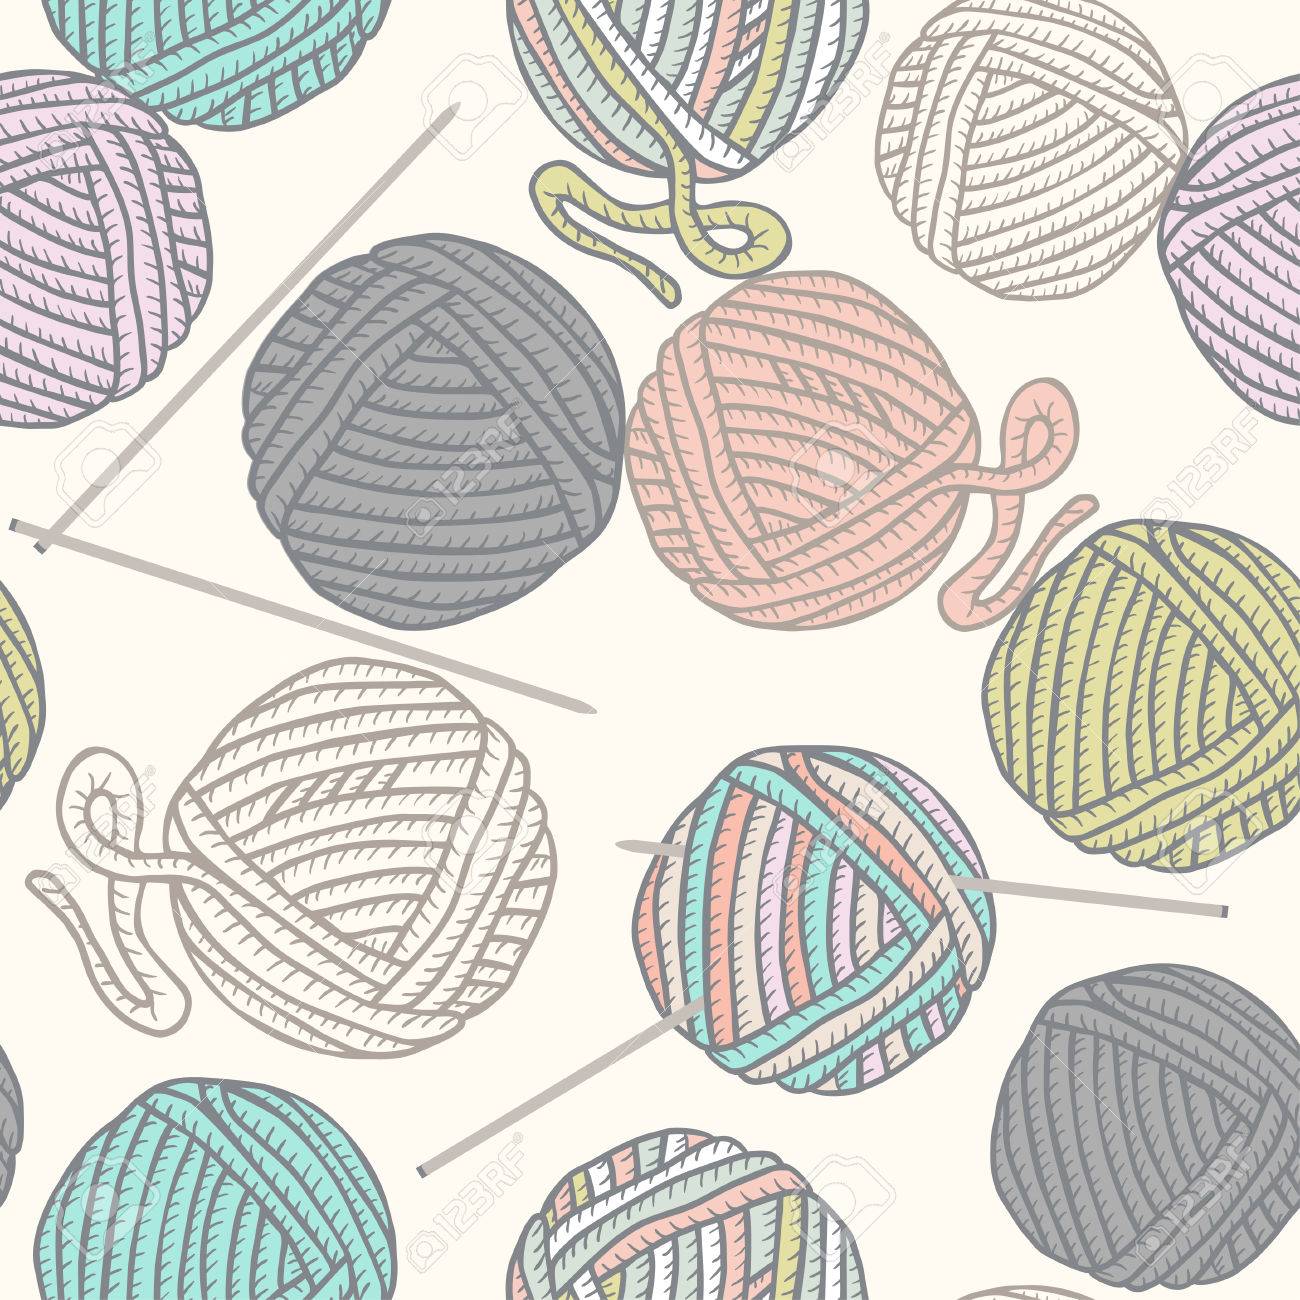 Seamless Pattern With Balls Of Yarn And Knitting Needles